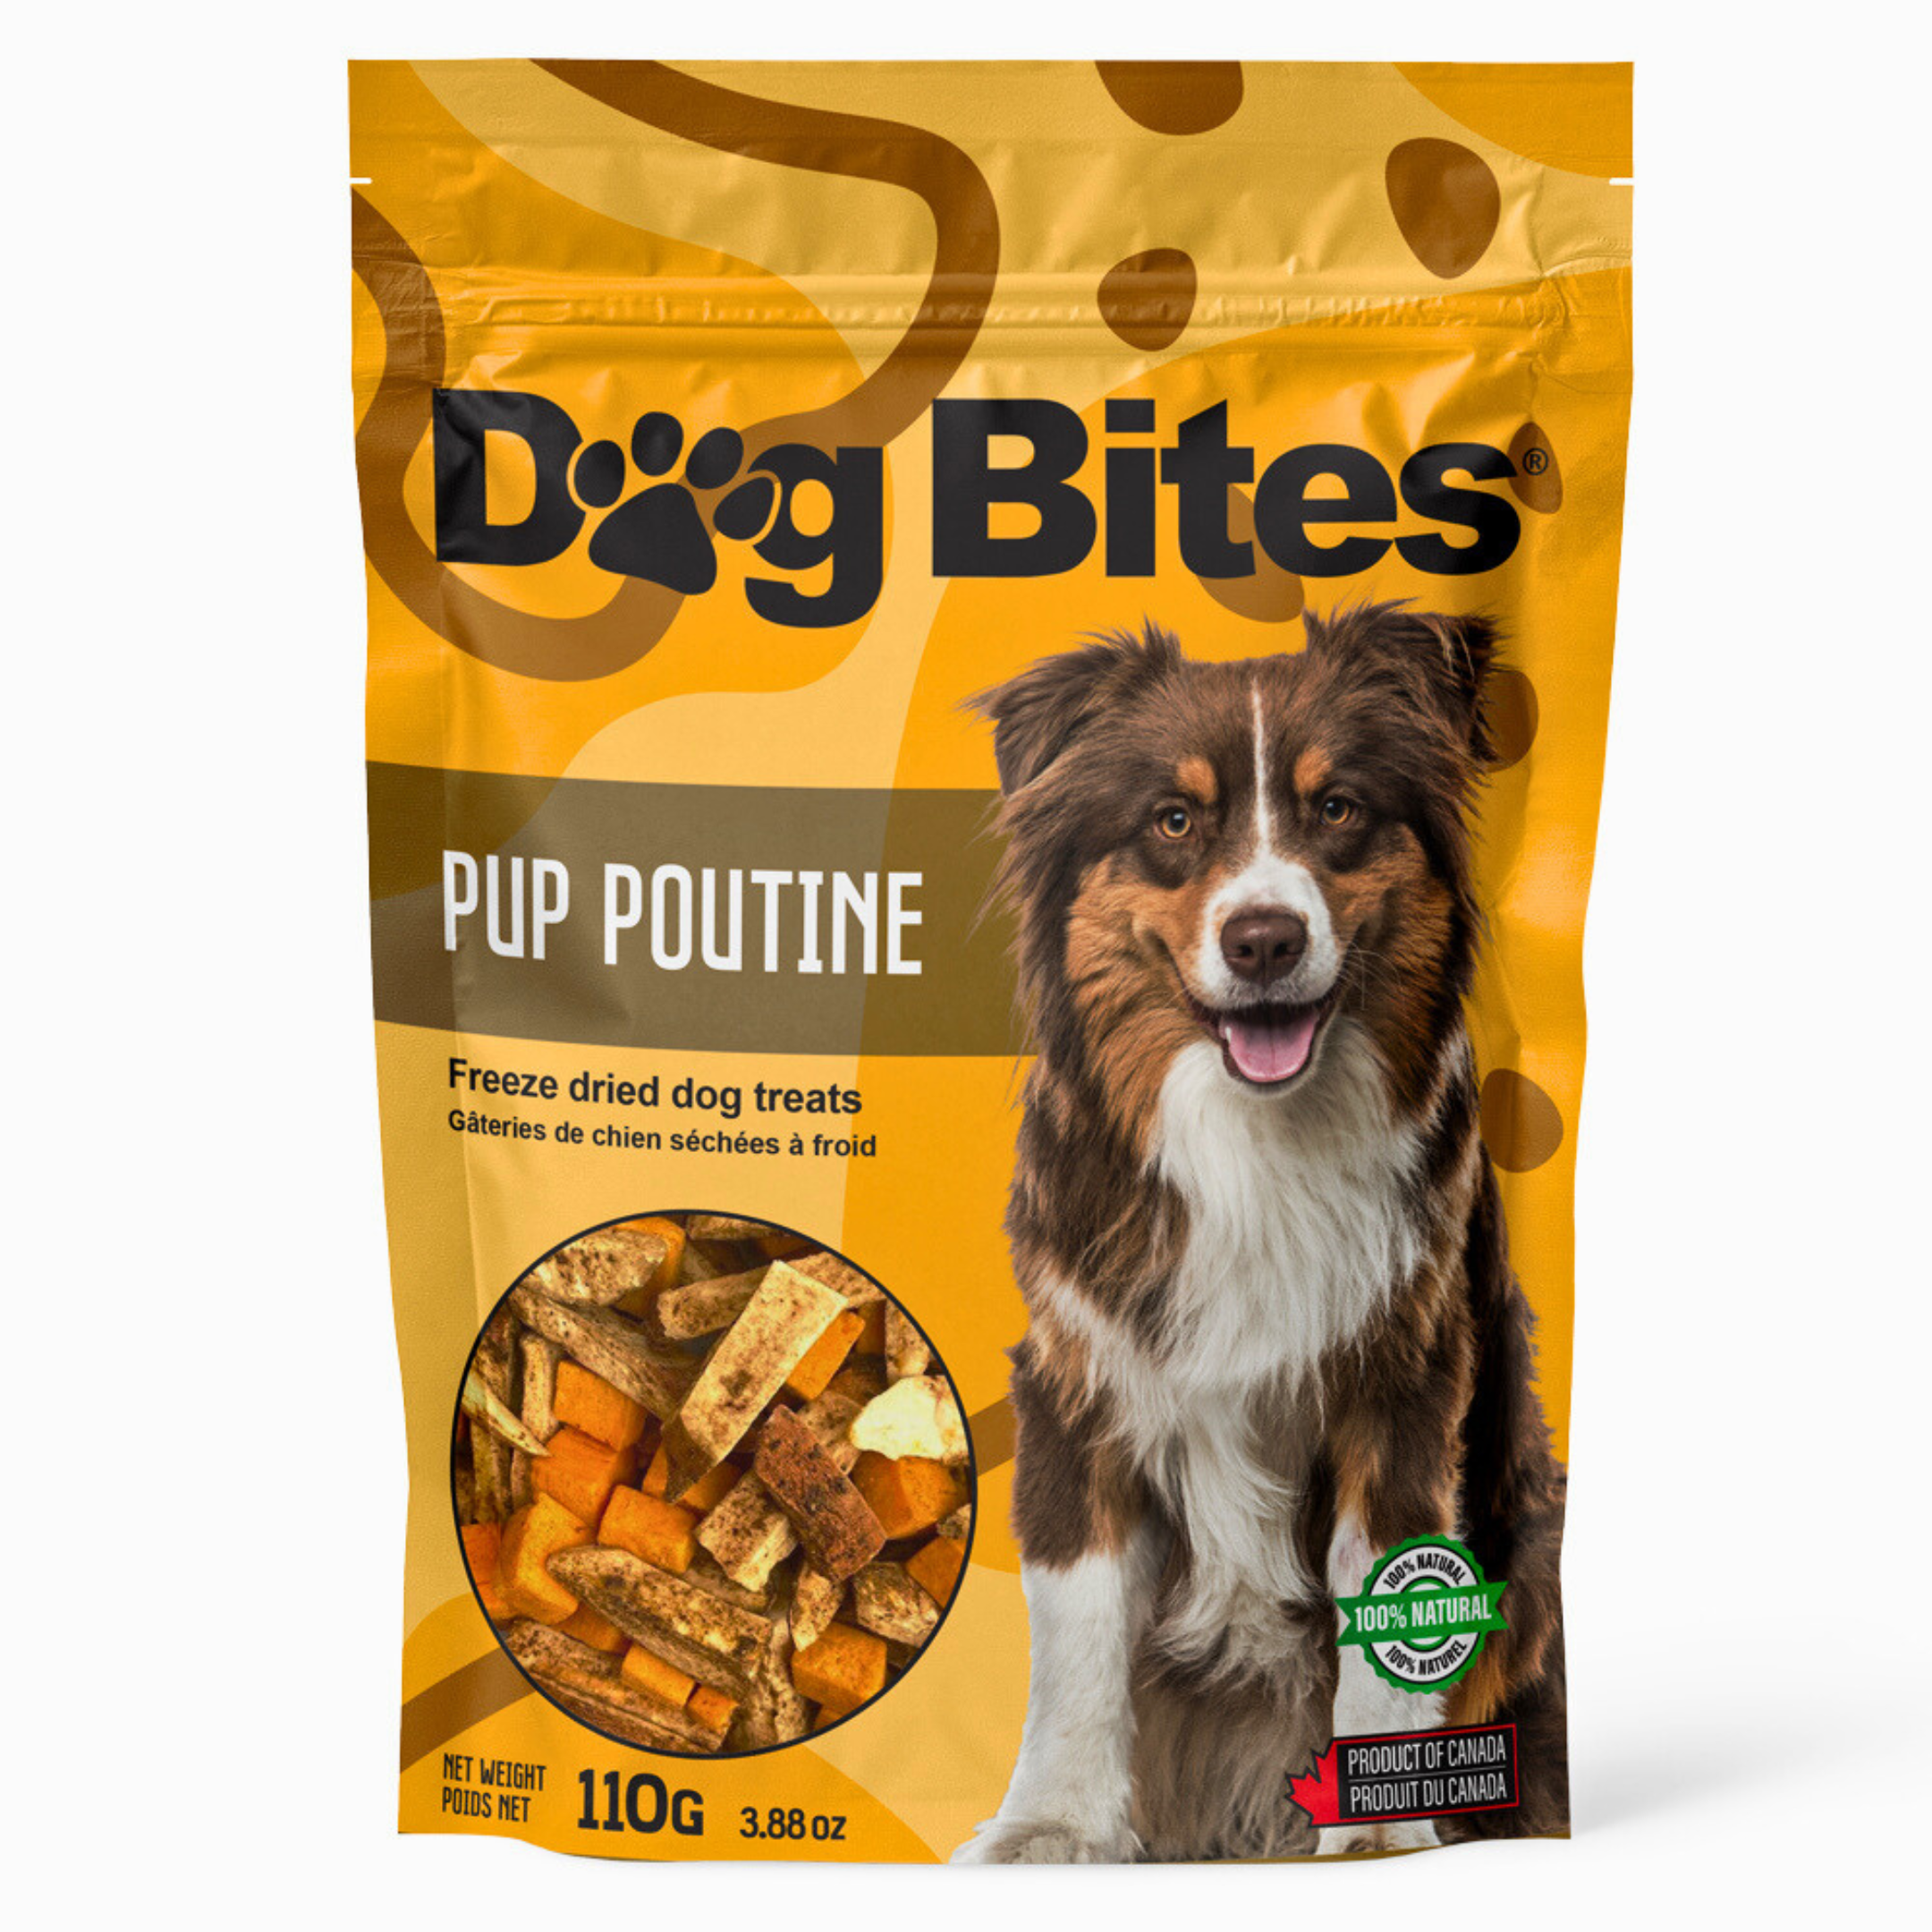 Dog Bites Pup Poutine